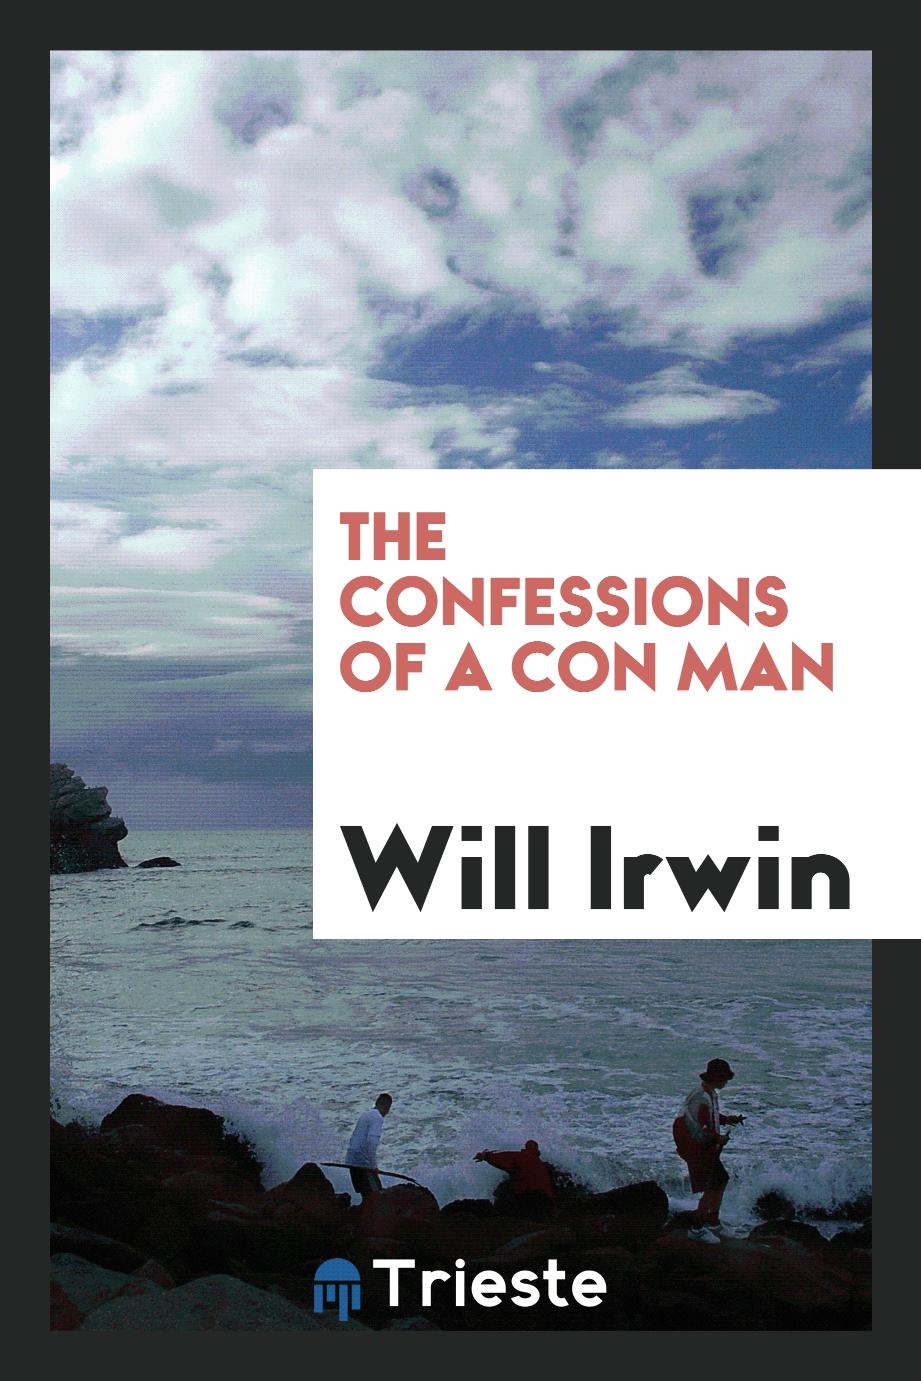 The confessions of a con man